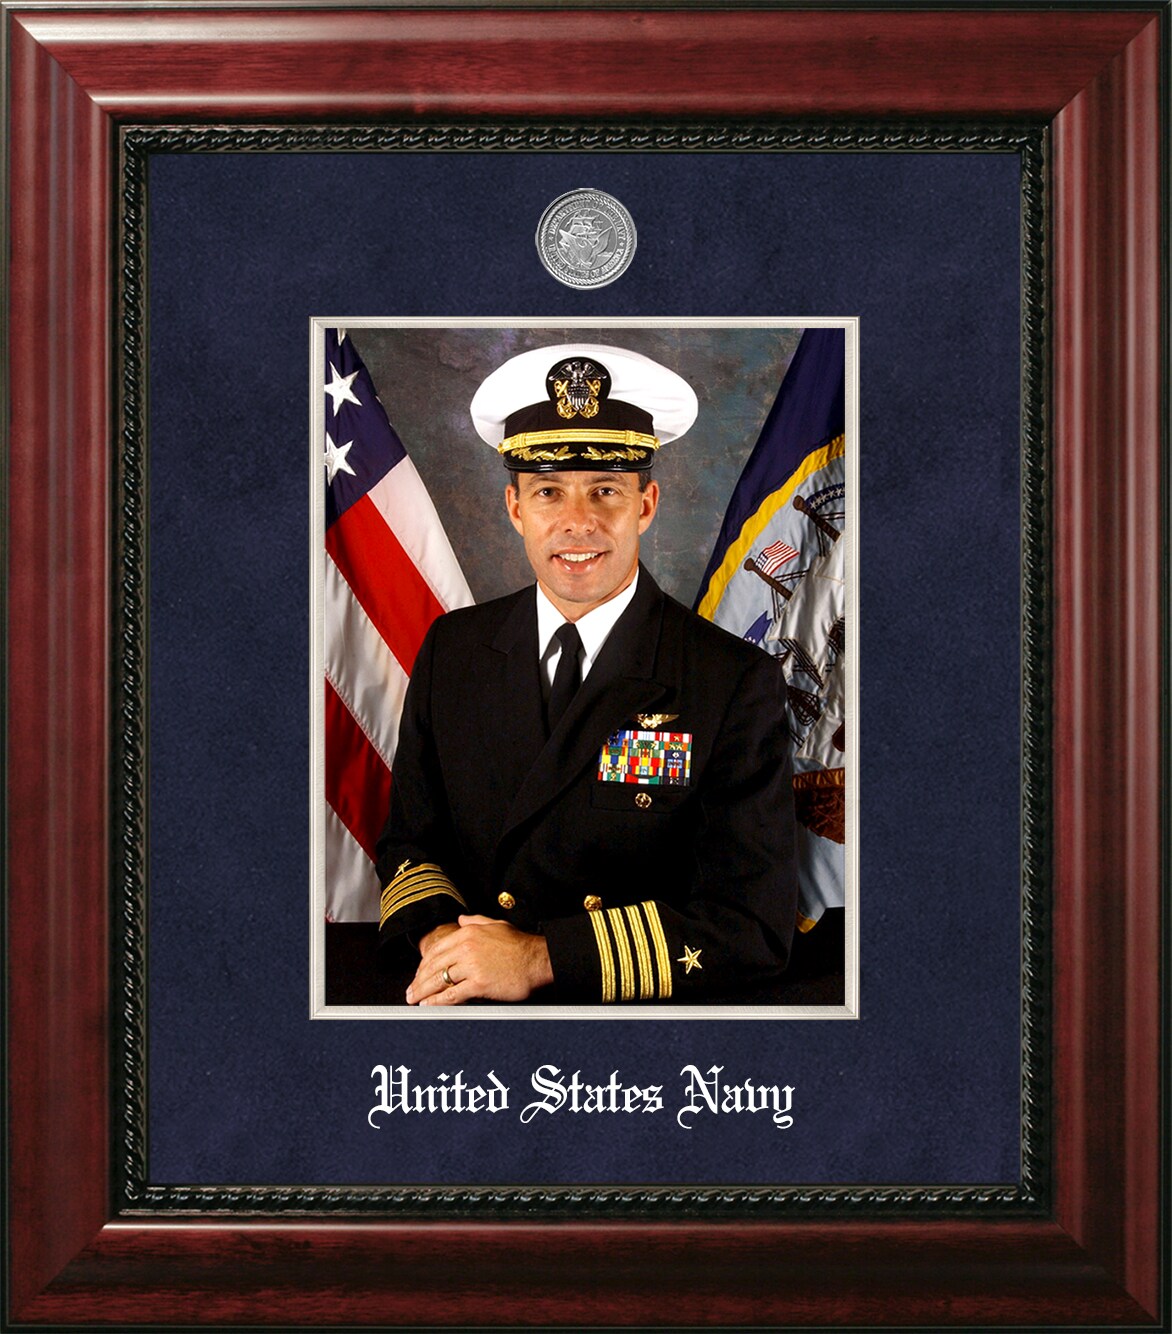 Patriot Frames Navy 8x10 Portrait Frame Executive Frame with Silver Medallion